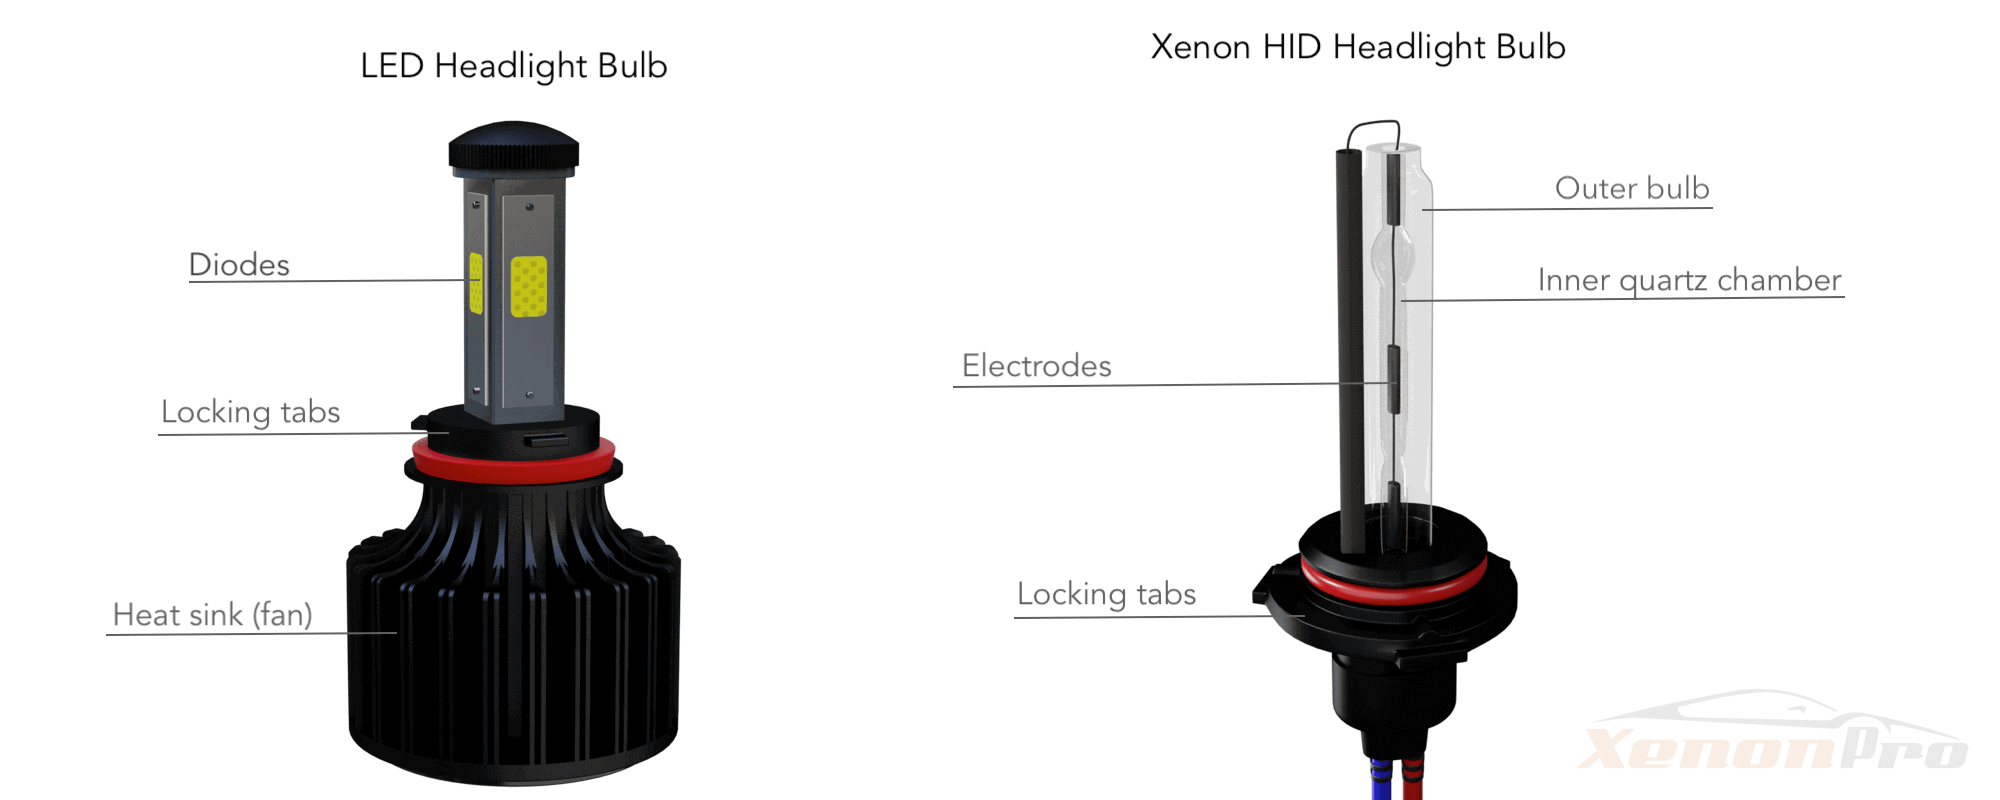 Mutual conservative Prisoner of war LED vs Xenon HID Headlights - Which Are Better? - XenonPro.com